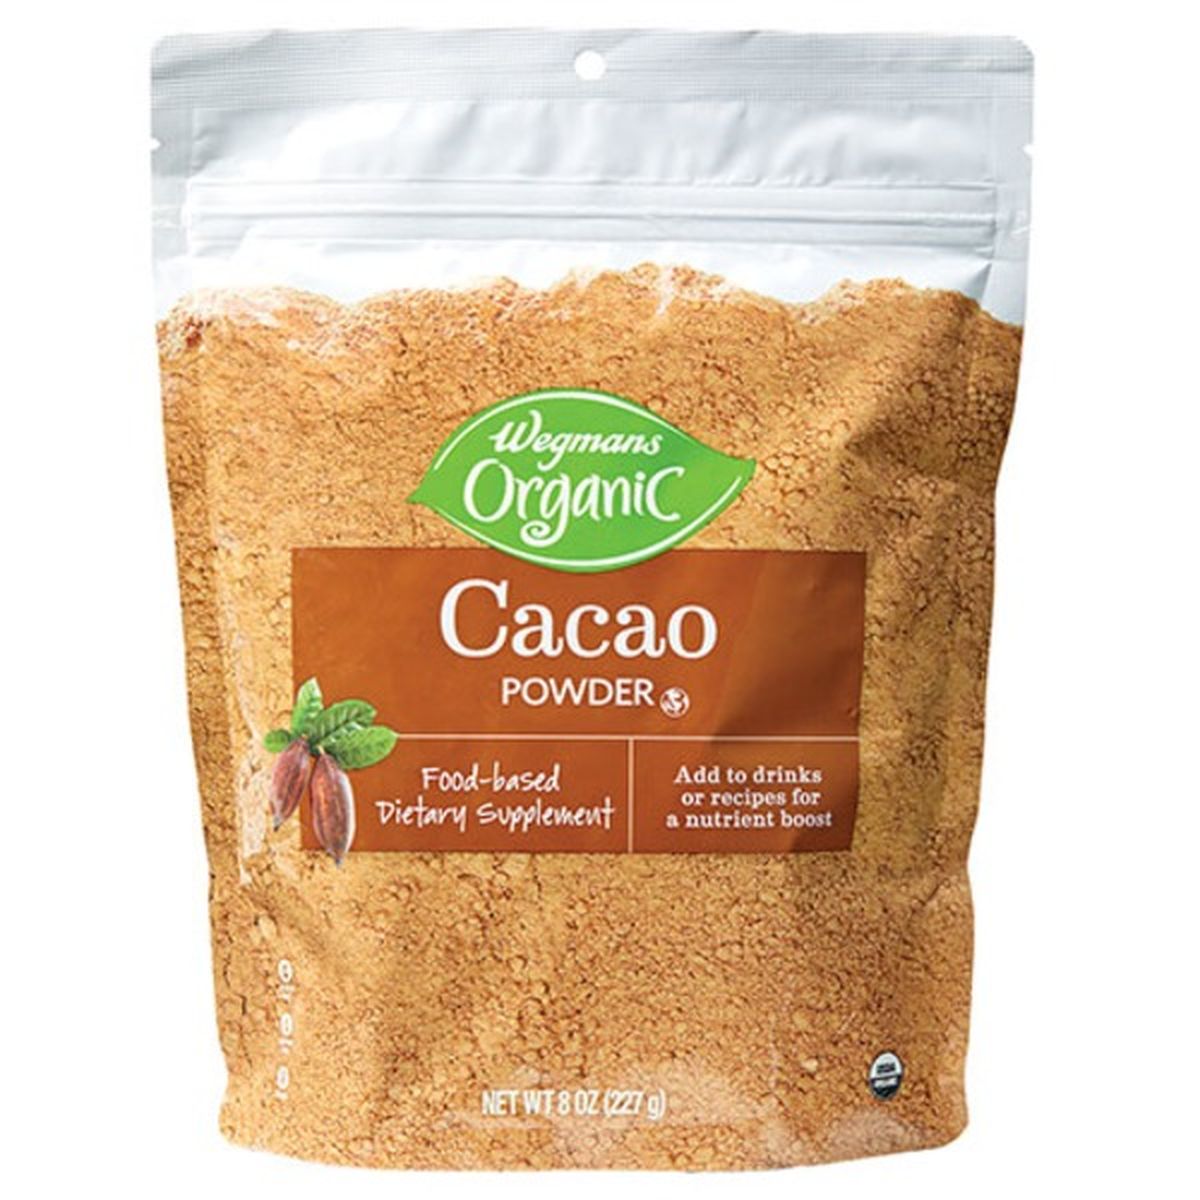 Calories in Wegmans Organic Cacao Powder